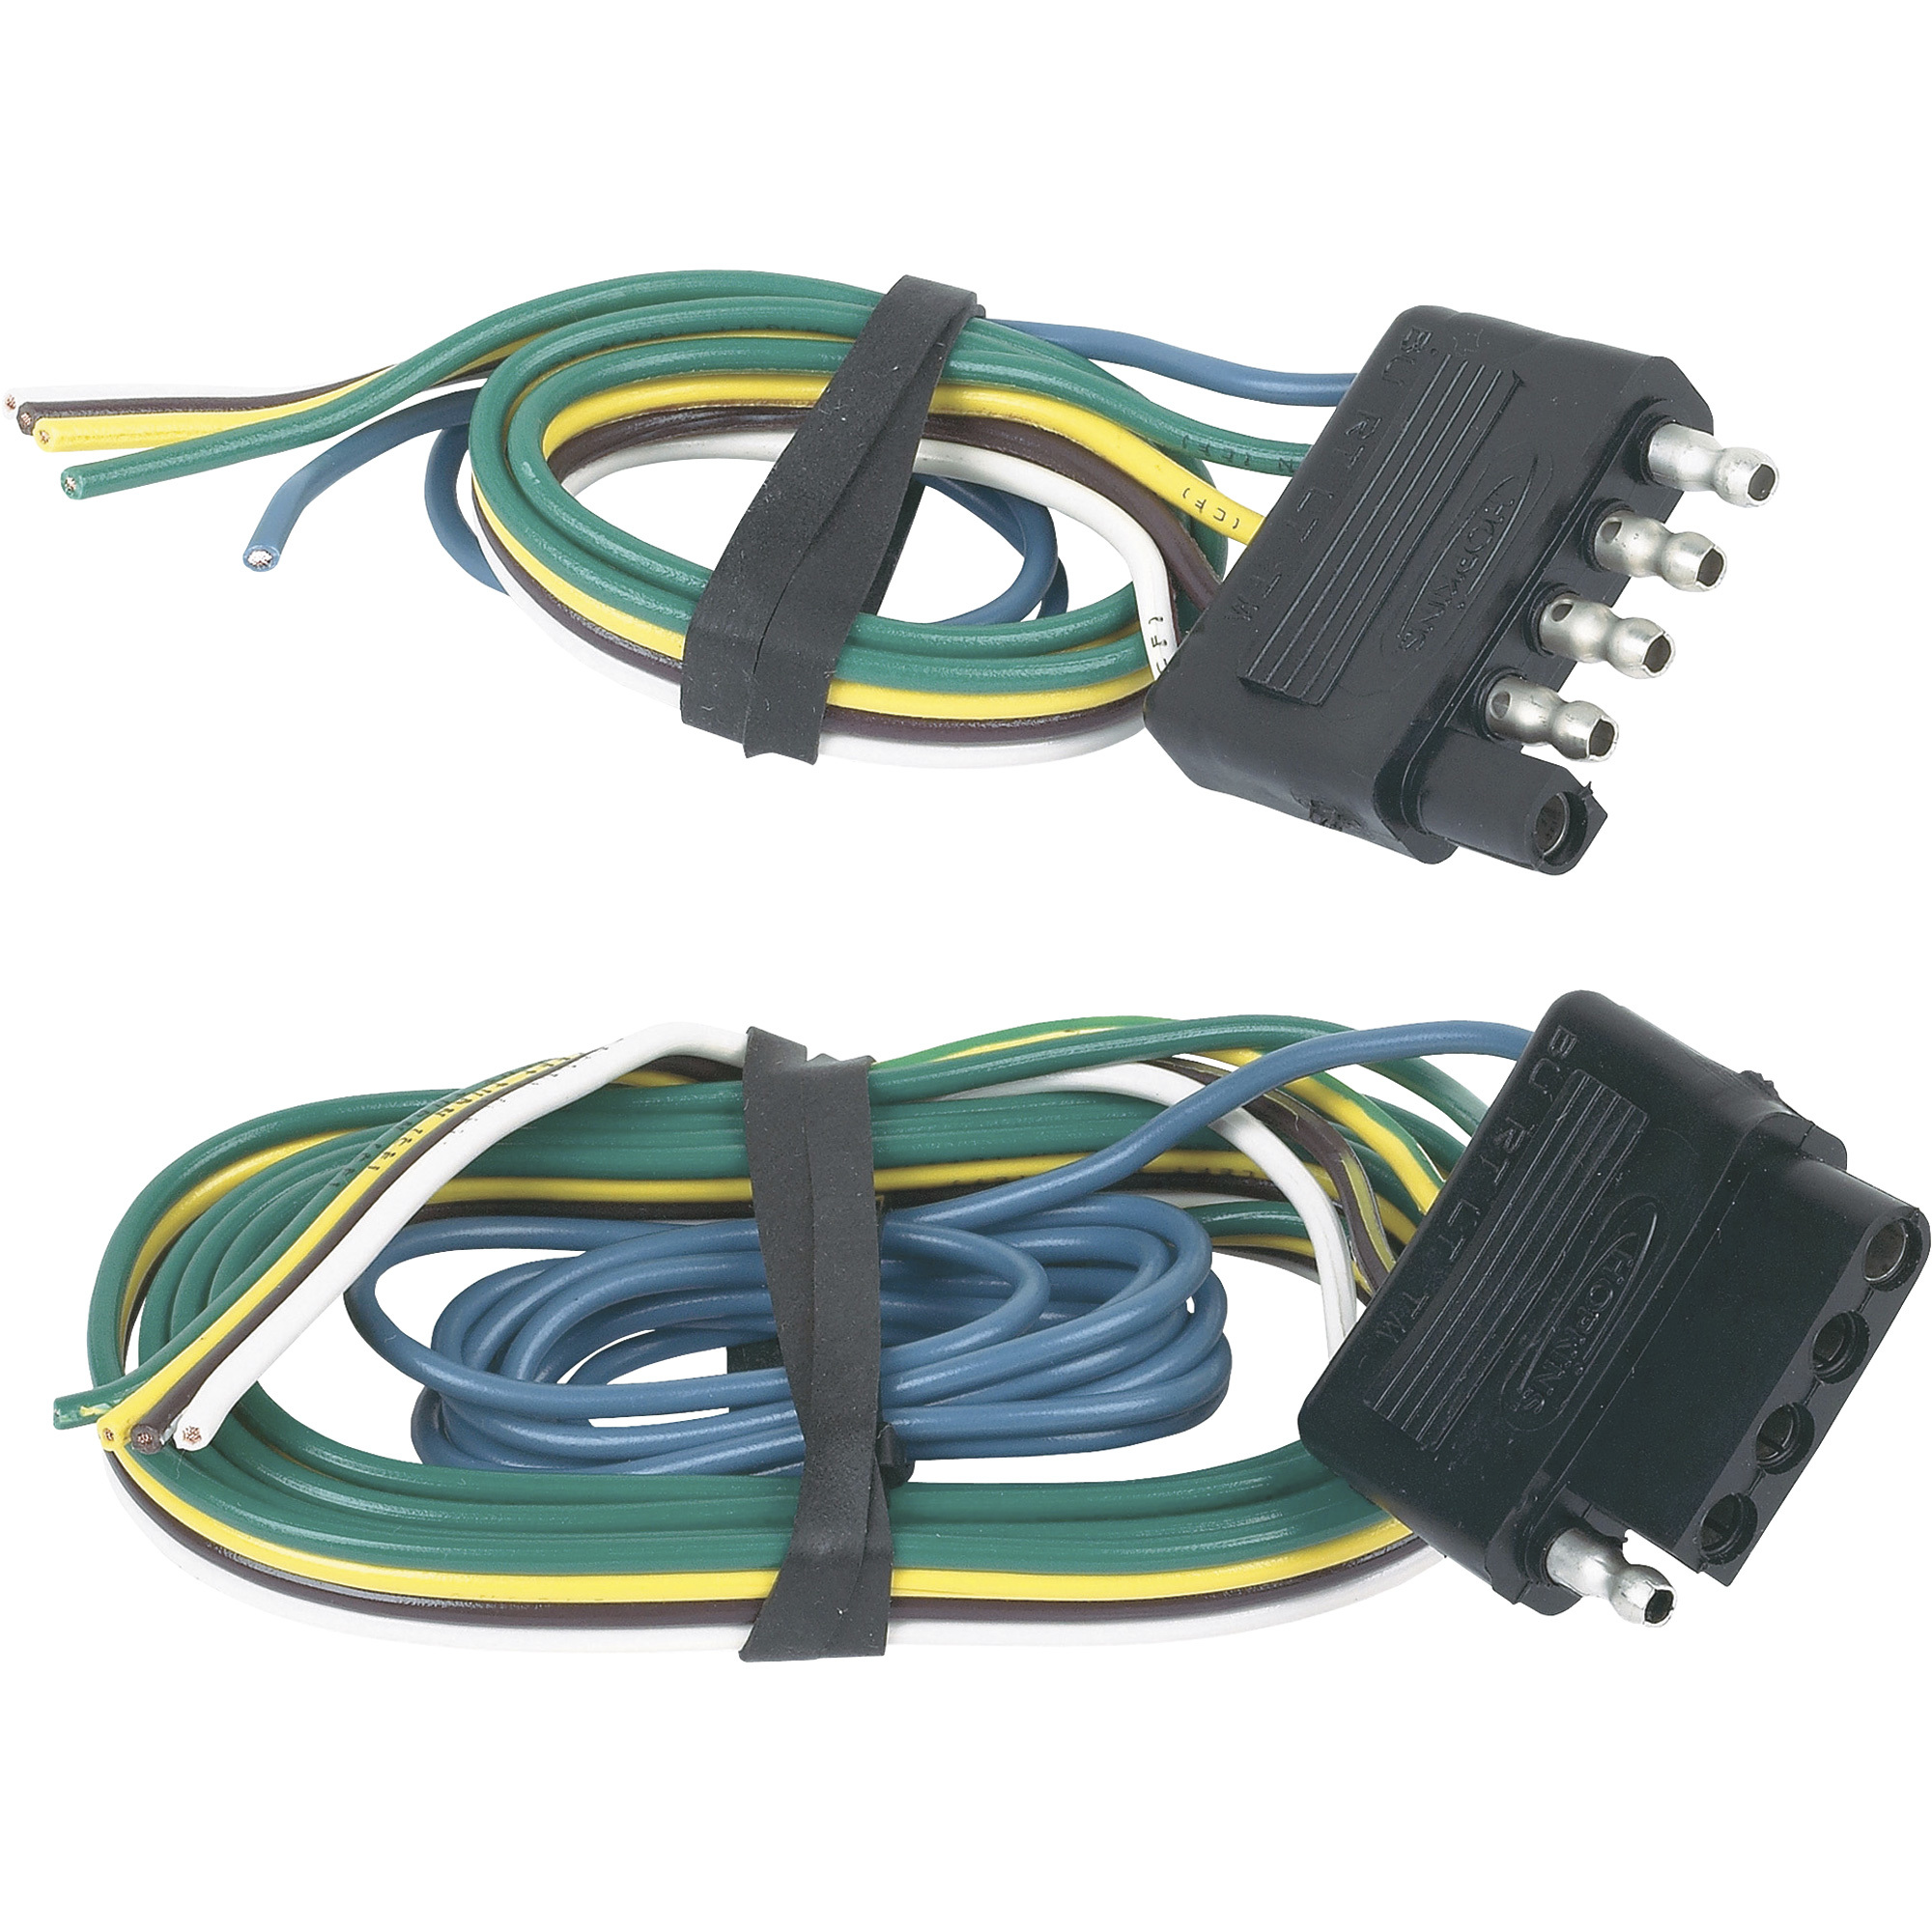 Hopkins Towing Solutions Trailer Light 5-Flat Connector Set â 48Inch Vehicle Side/12Inch Trailer Side, Model 47895